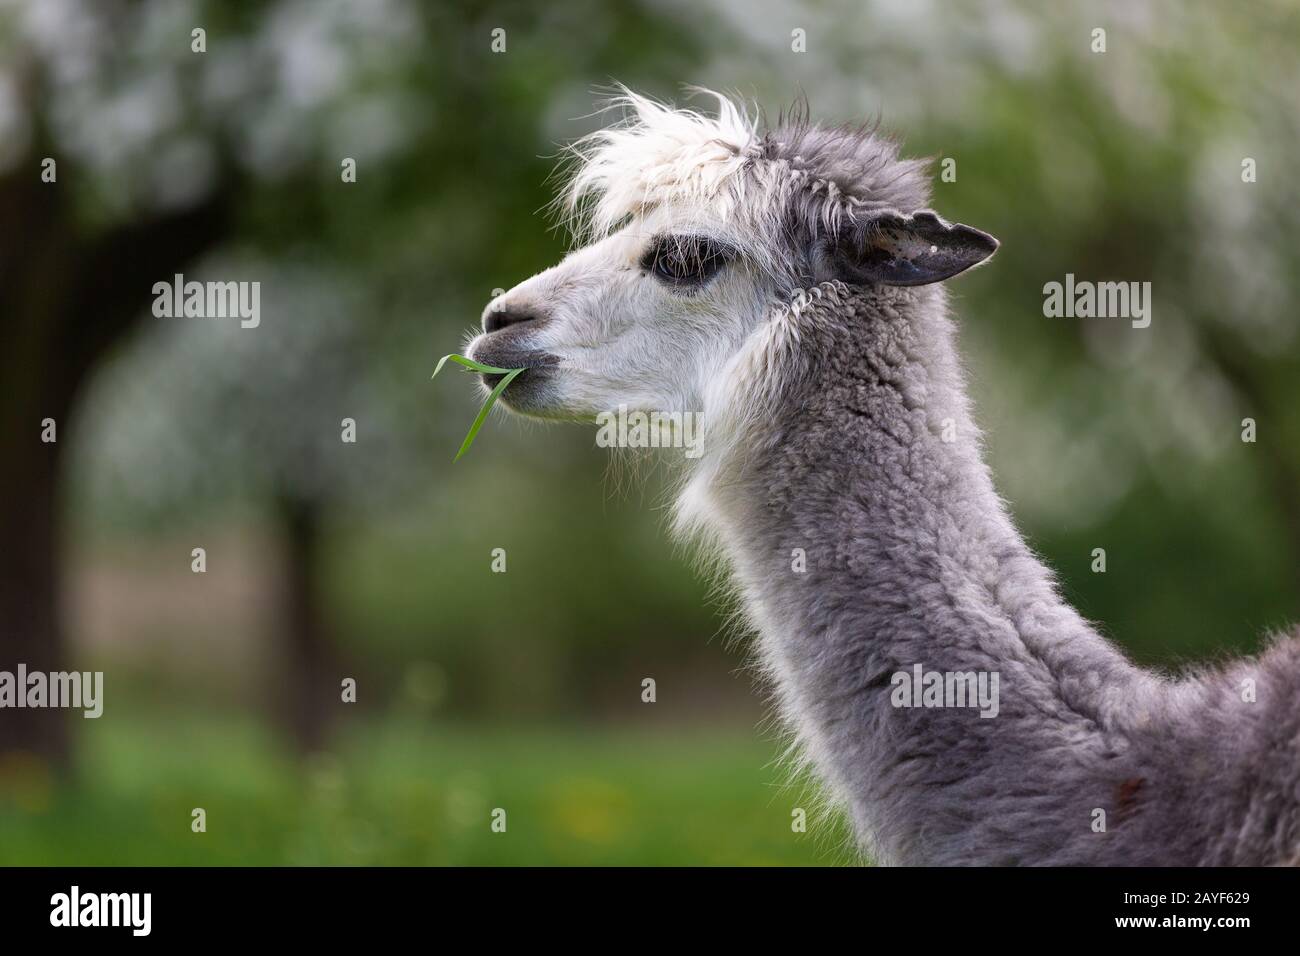 Alpaca eating grass, a South American mammal Stock Photo